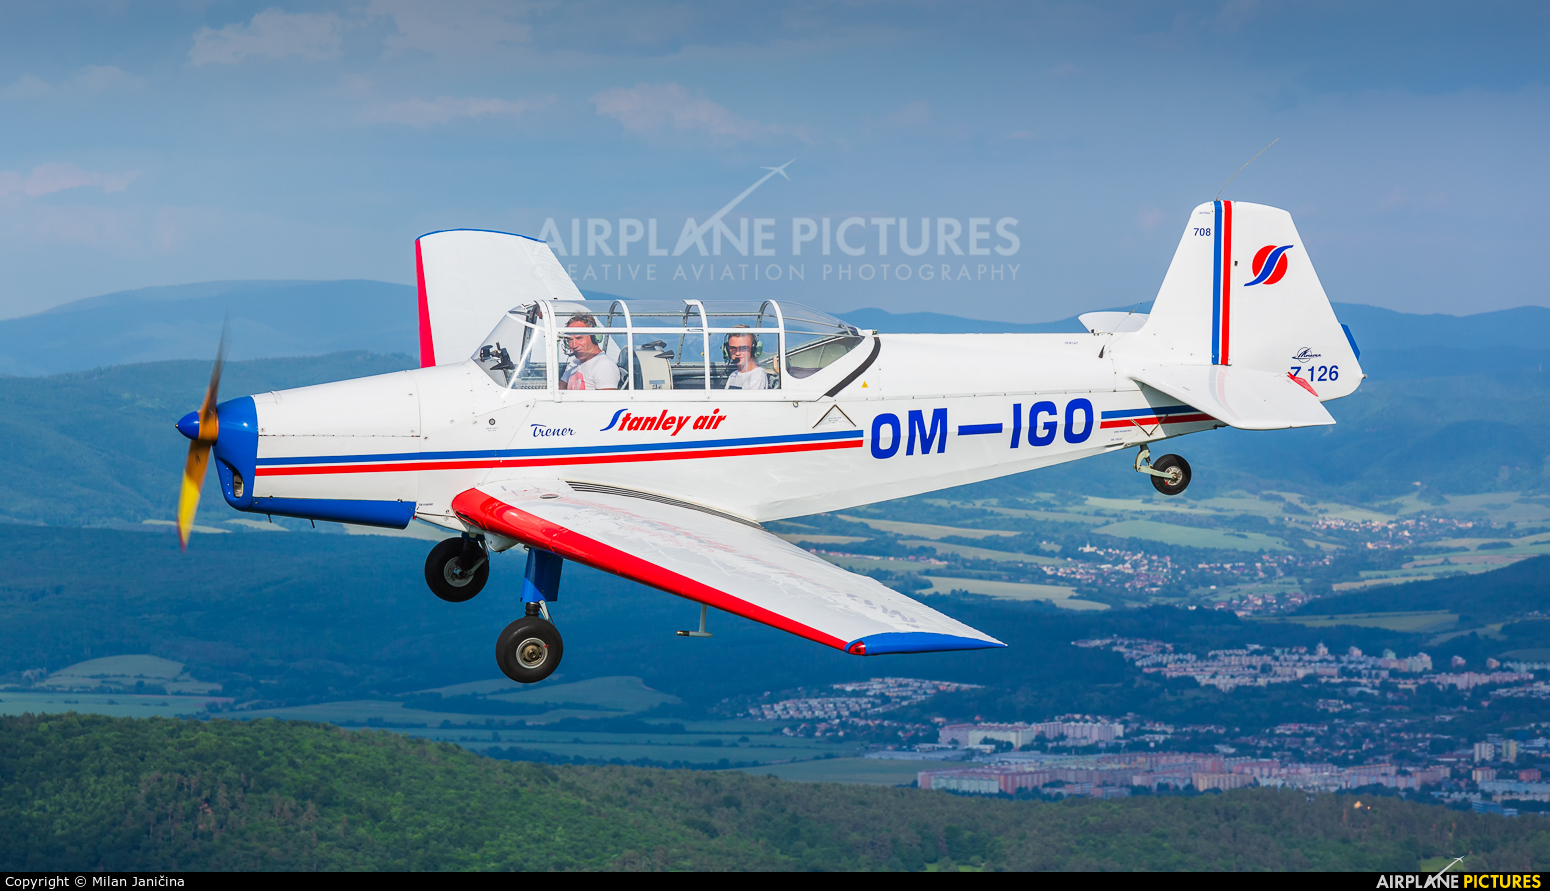 Stanley Air OM-IGO aircraft at In Flight - Slovakia